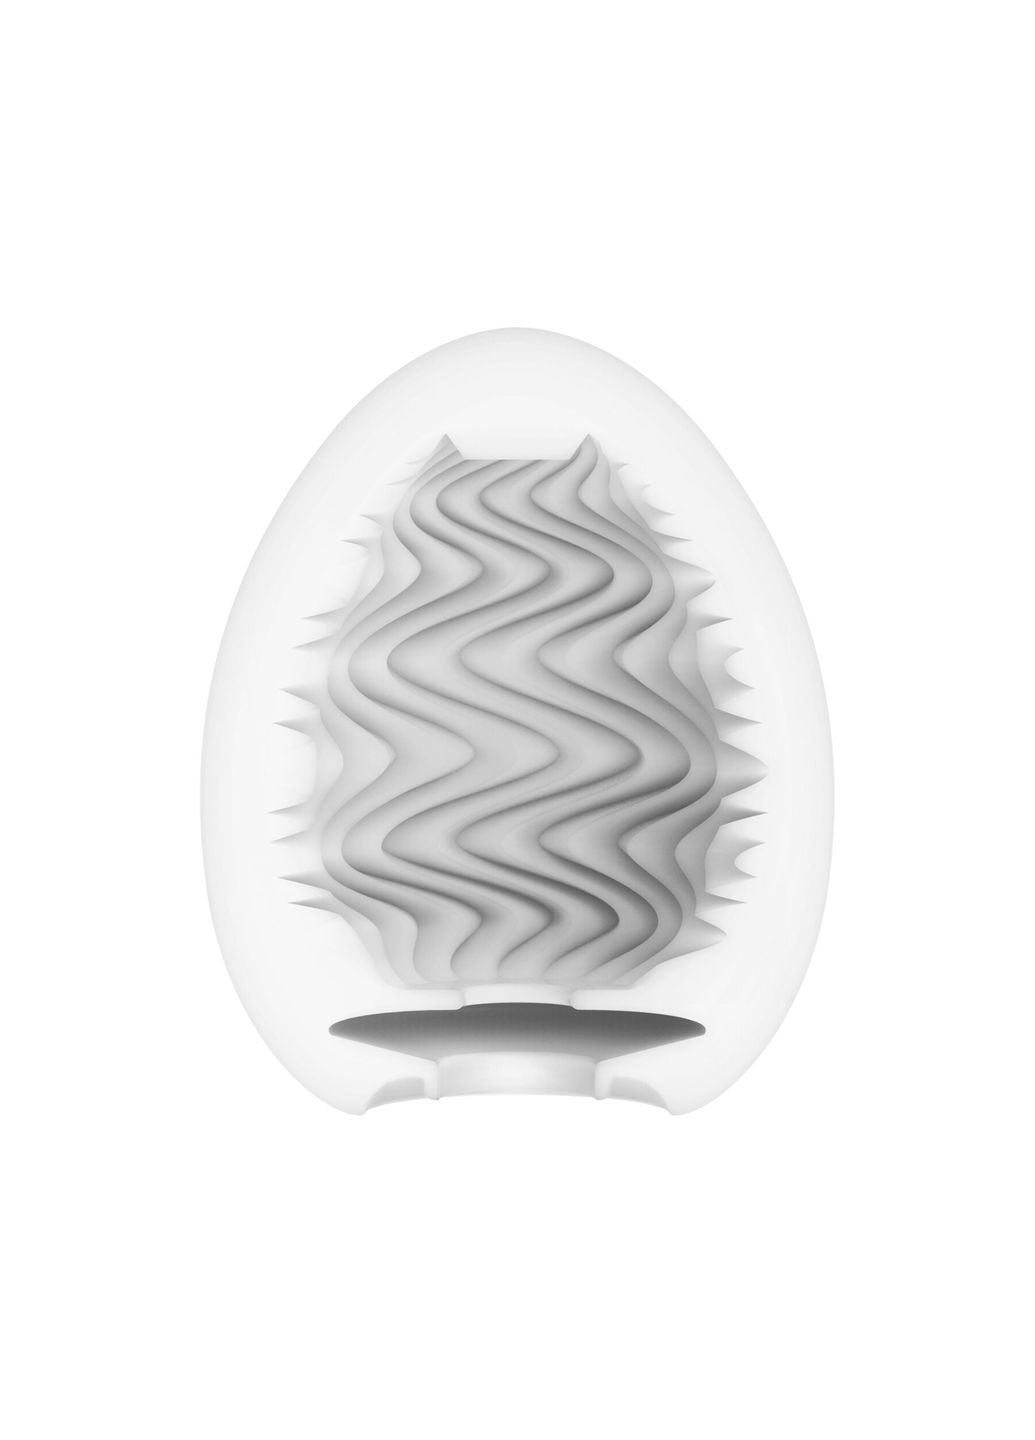 Мастурбатор Egg Wind с зигзагообразным рельефом - CherryLove Tenga (282709965)